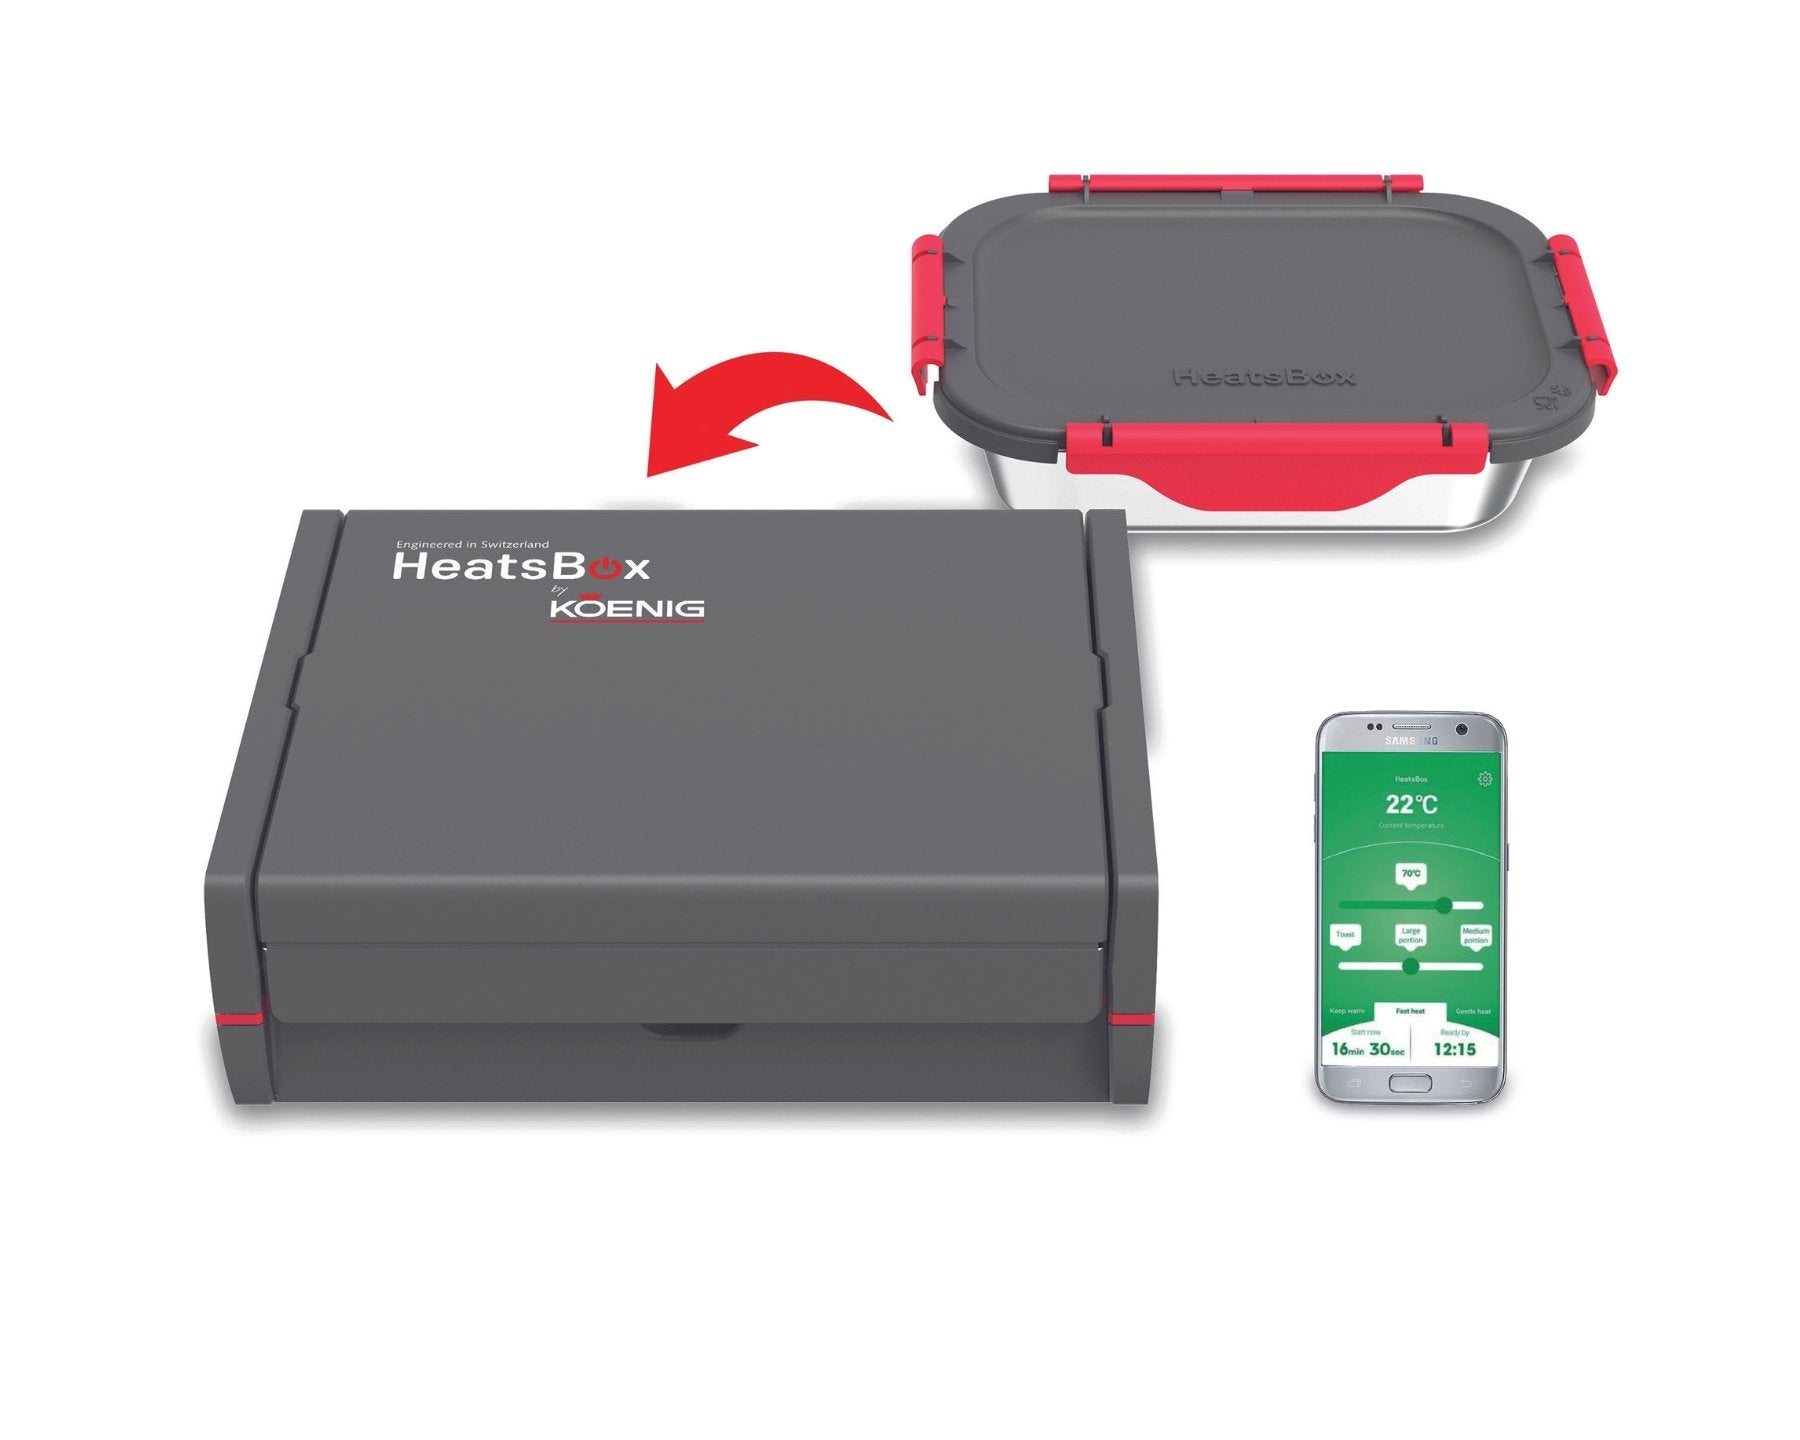 KOENIG HeatsBox, the world's first intelligent, heatable lunch box